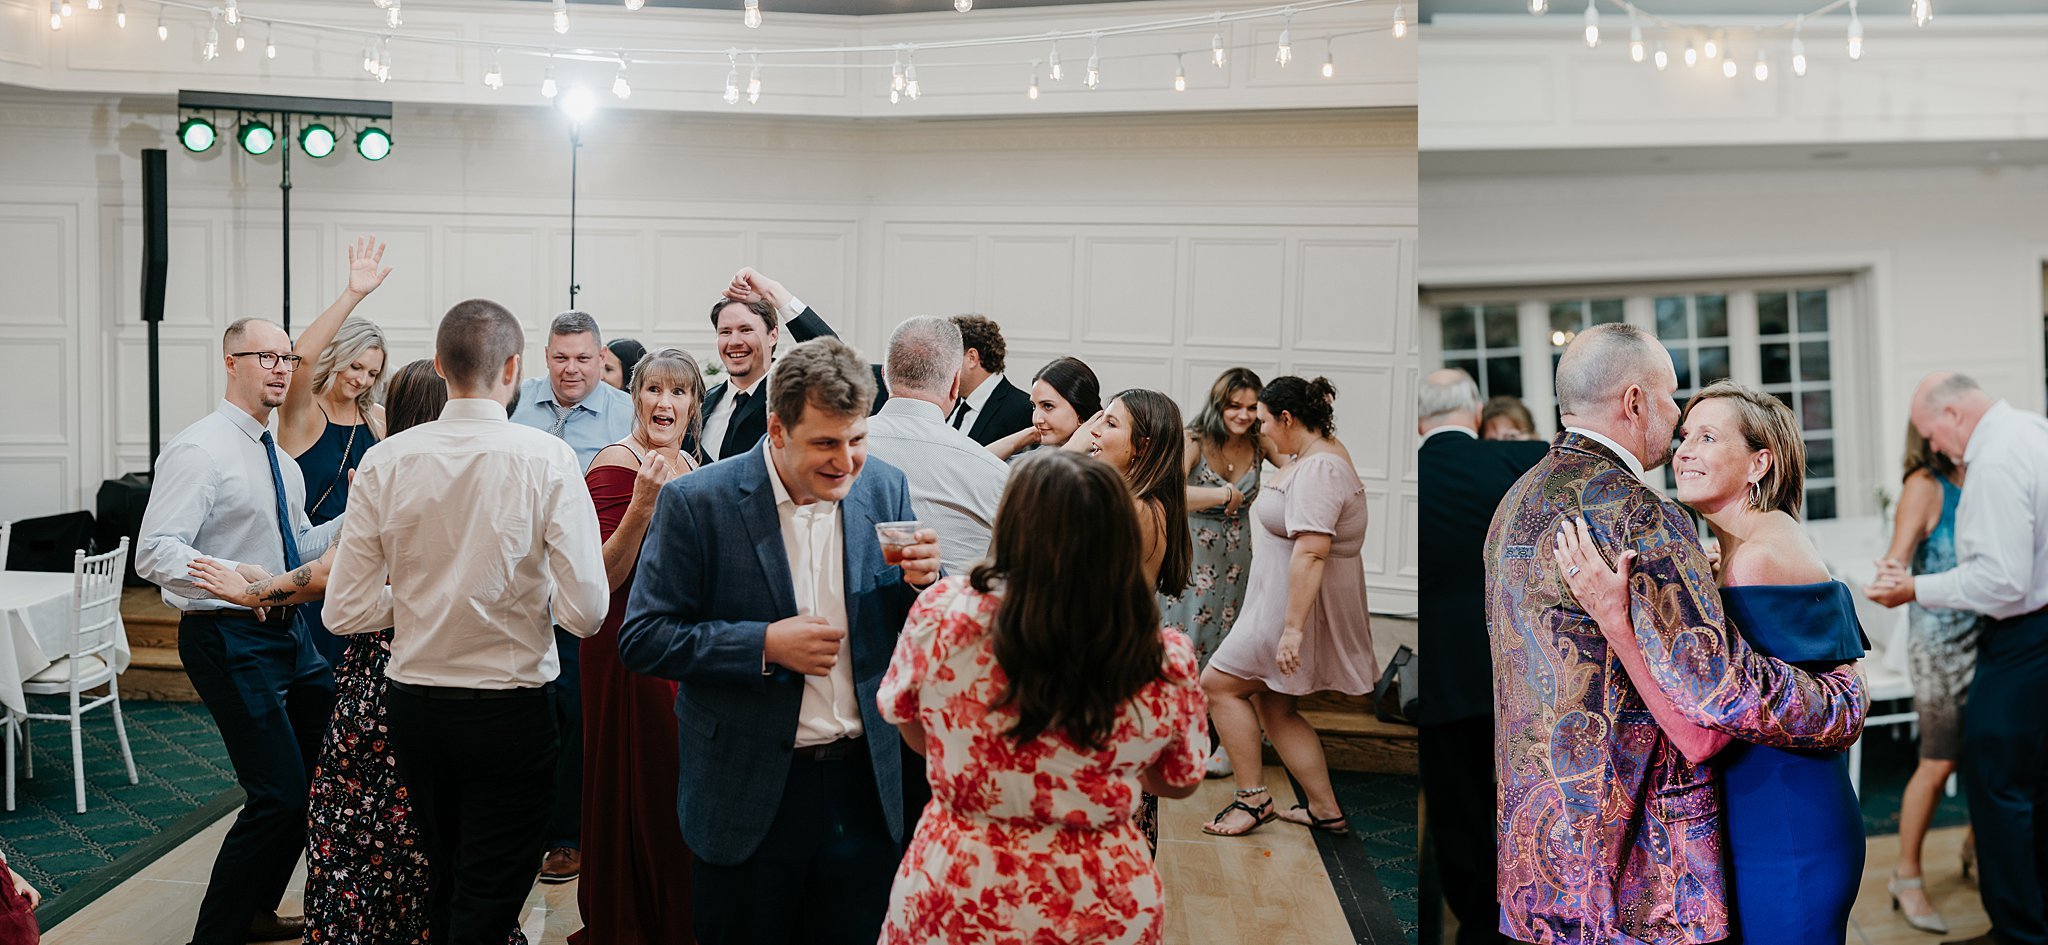 Minnesota wedding DJ keeps dance floor busy